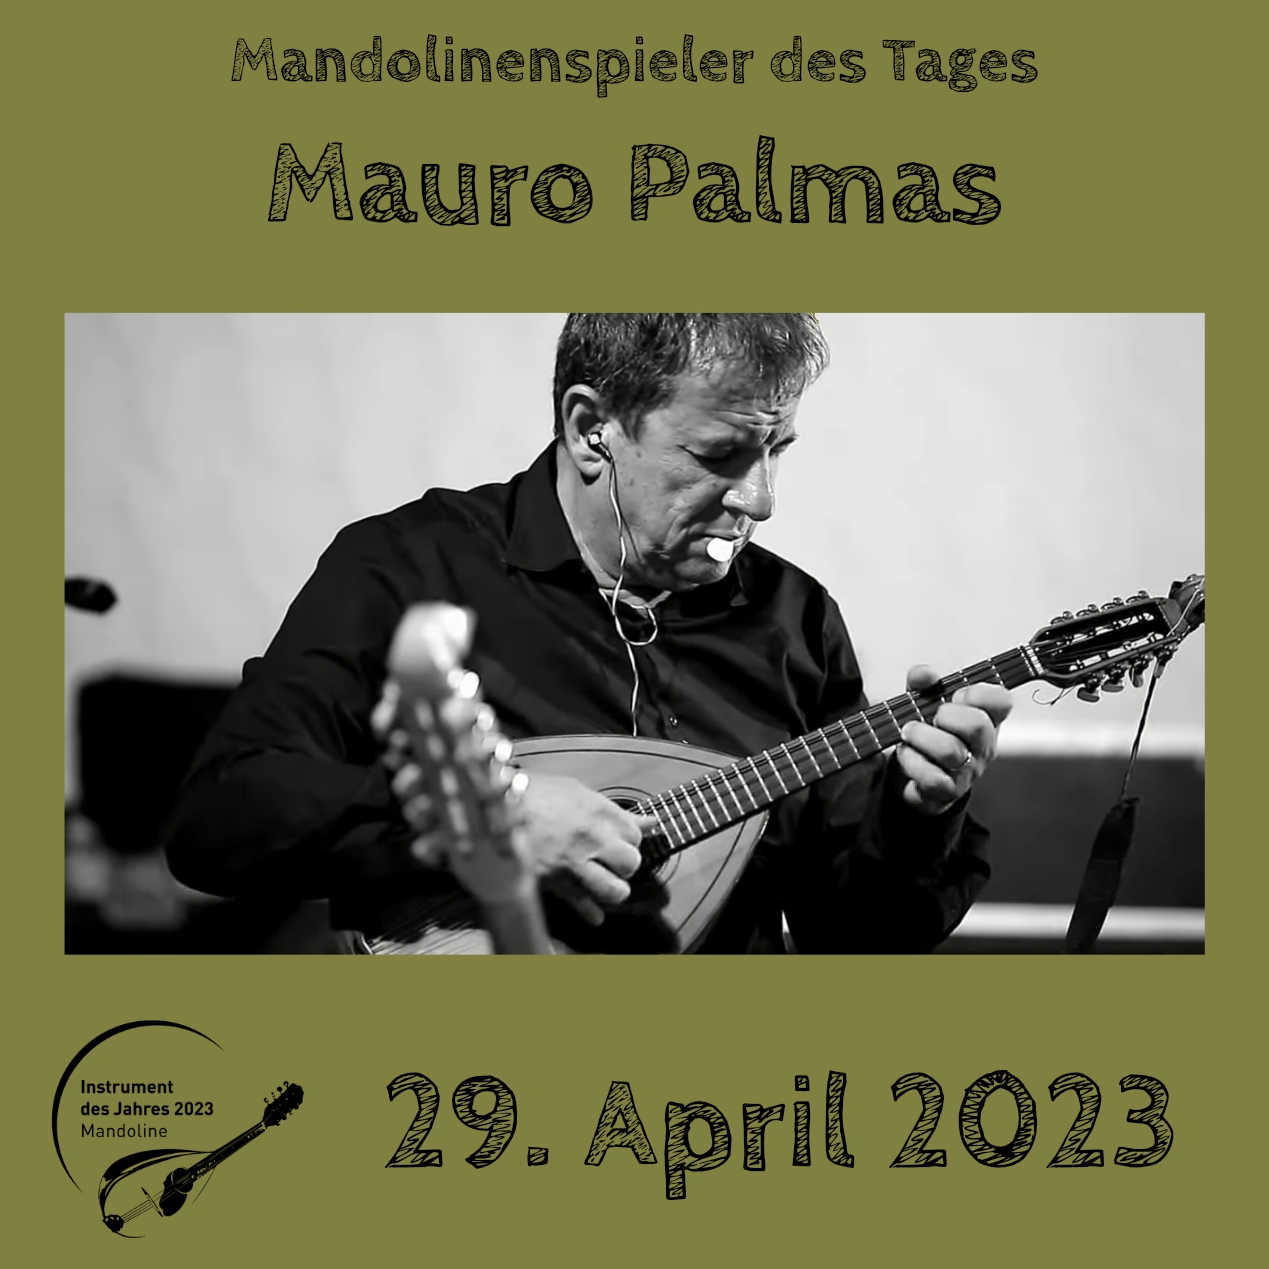 Mauro Palmas Mandola Mandocello Liutocantabile Instrument des Jahres 2023 Mandolinenspieler Mandolinenspielerin des Tages